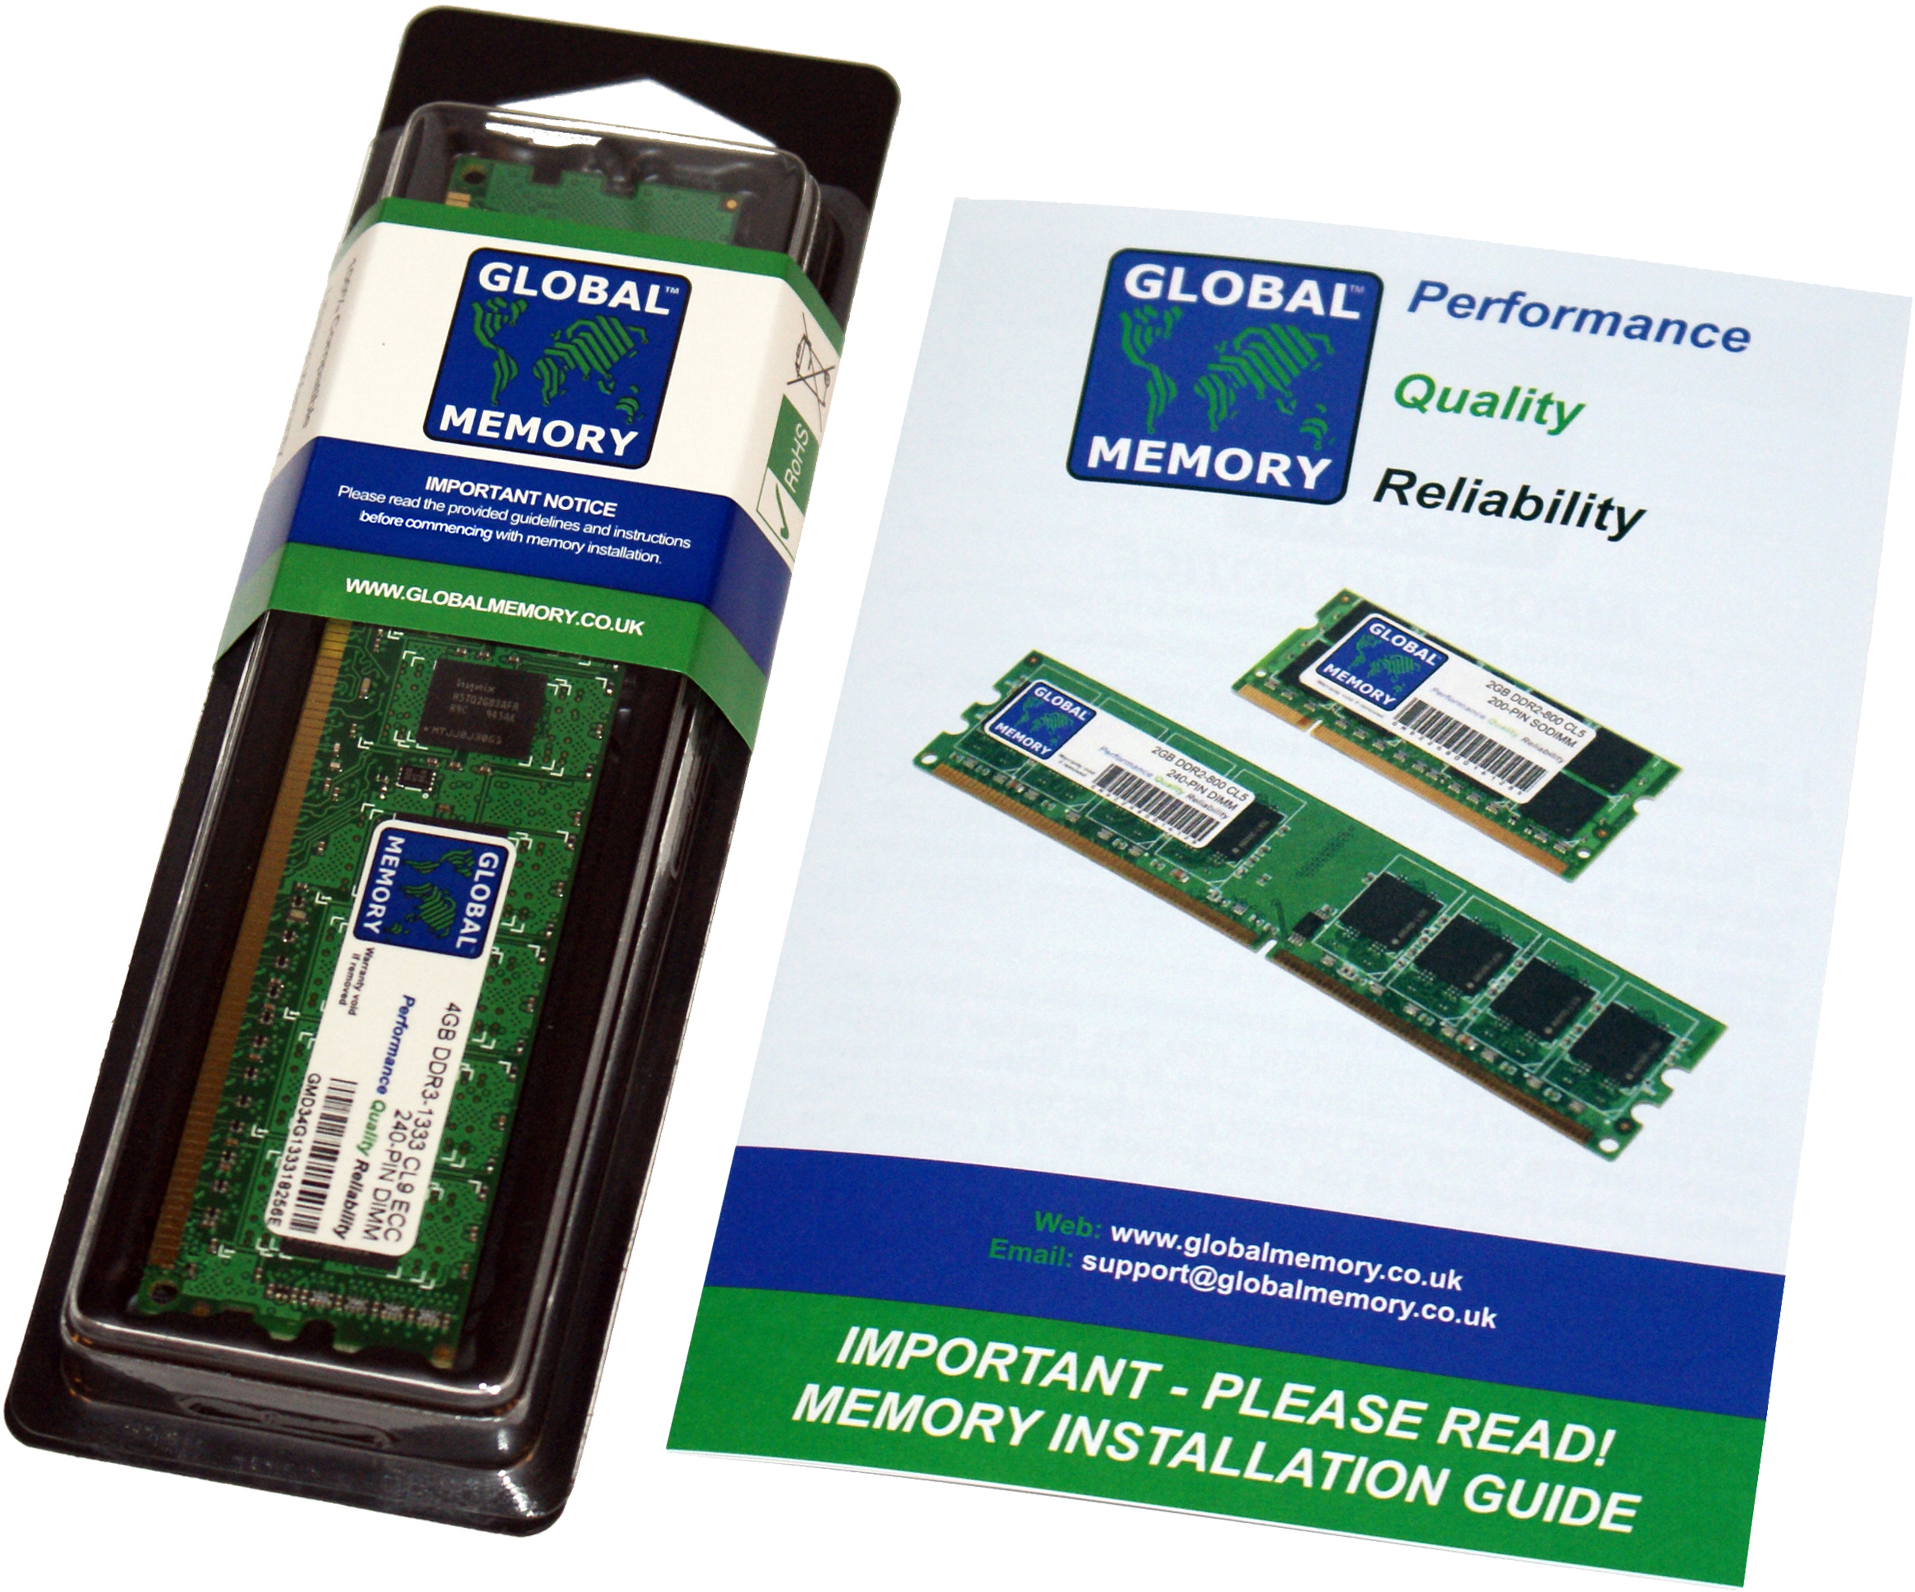 16GB DDR4 2400MHz PC4-19200 288-PIN ECC DIMM (UDIMM) MEMORY RAM FOR FUJITSU SERVERS/WORKSTATIONS